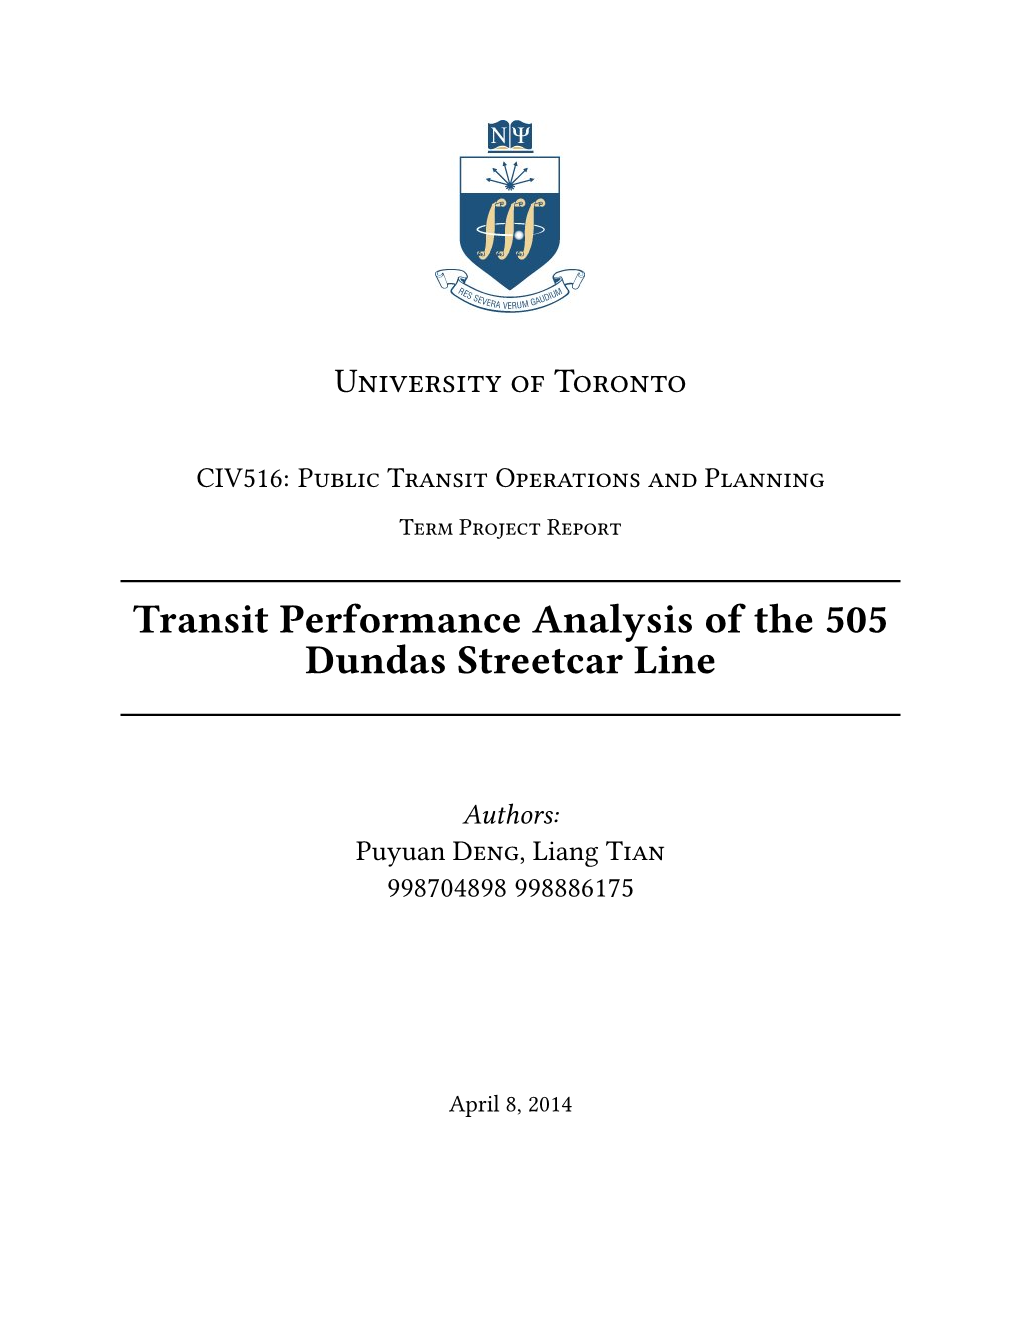 Transit Performance Analysis of the 505 Dundas Streetcar Line